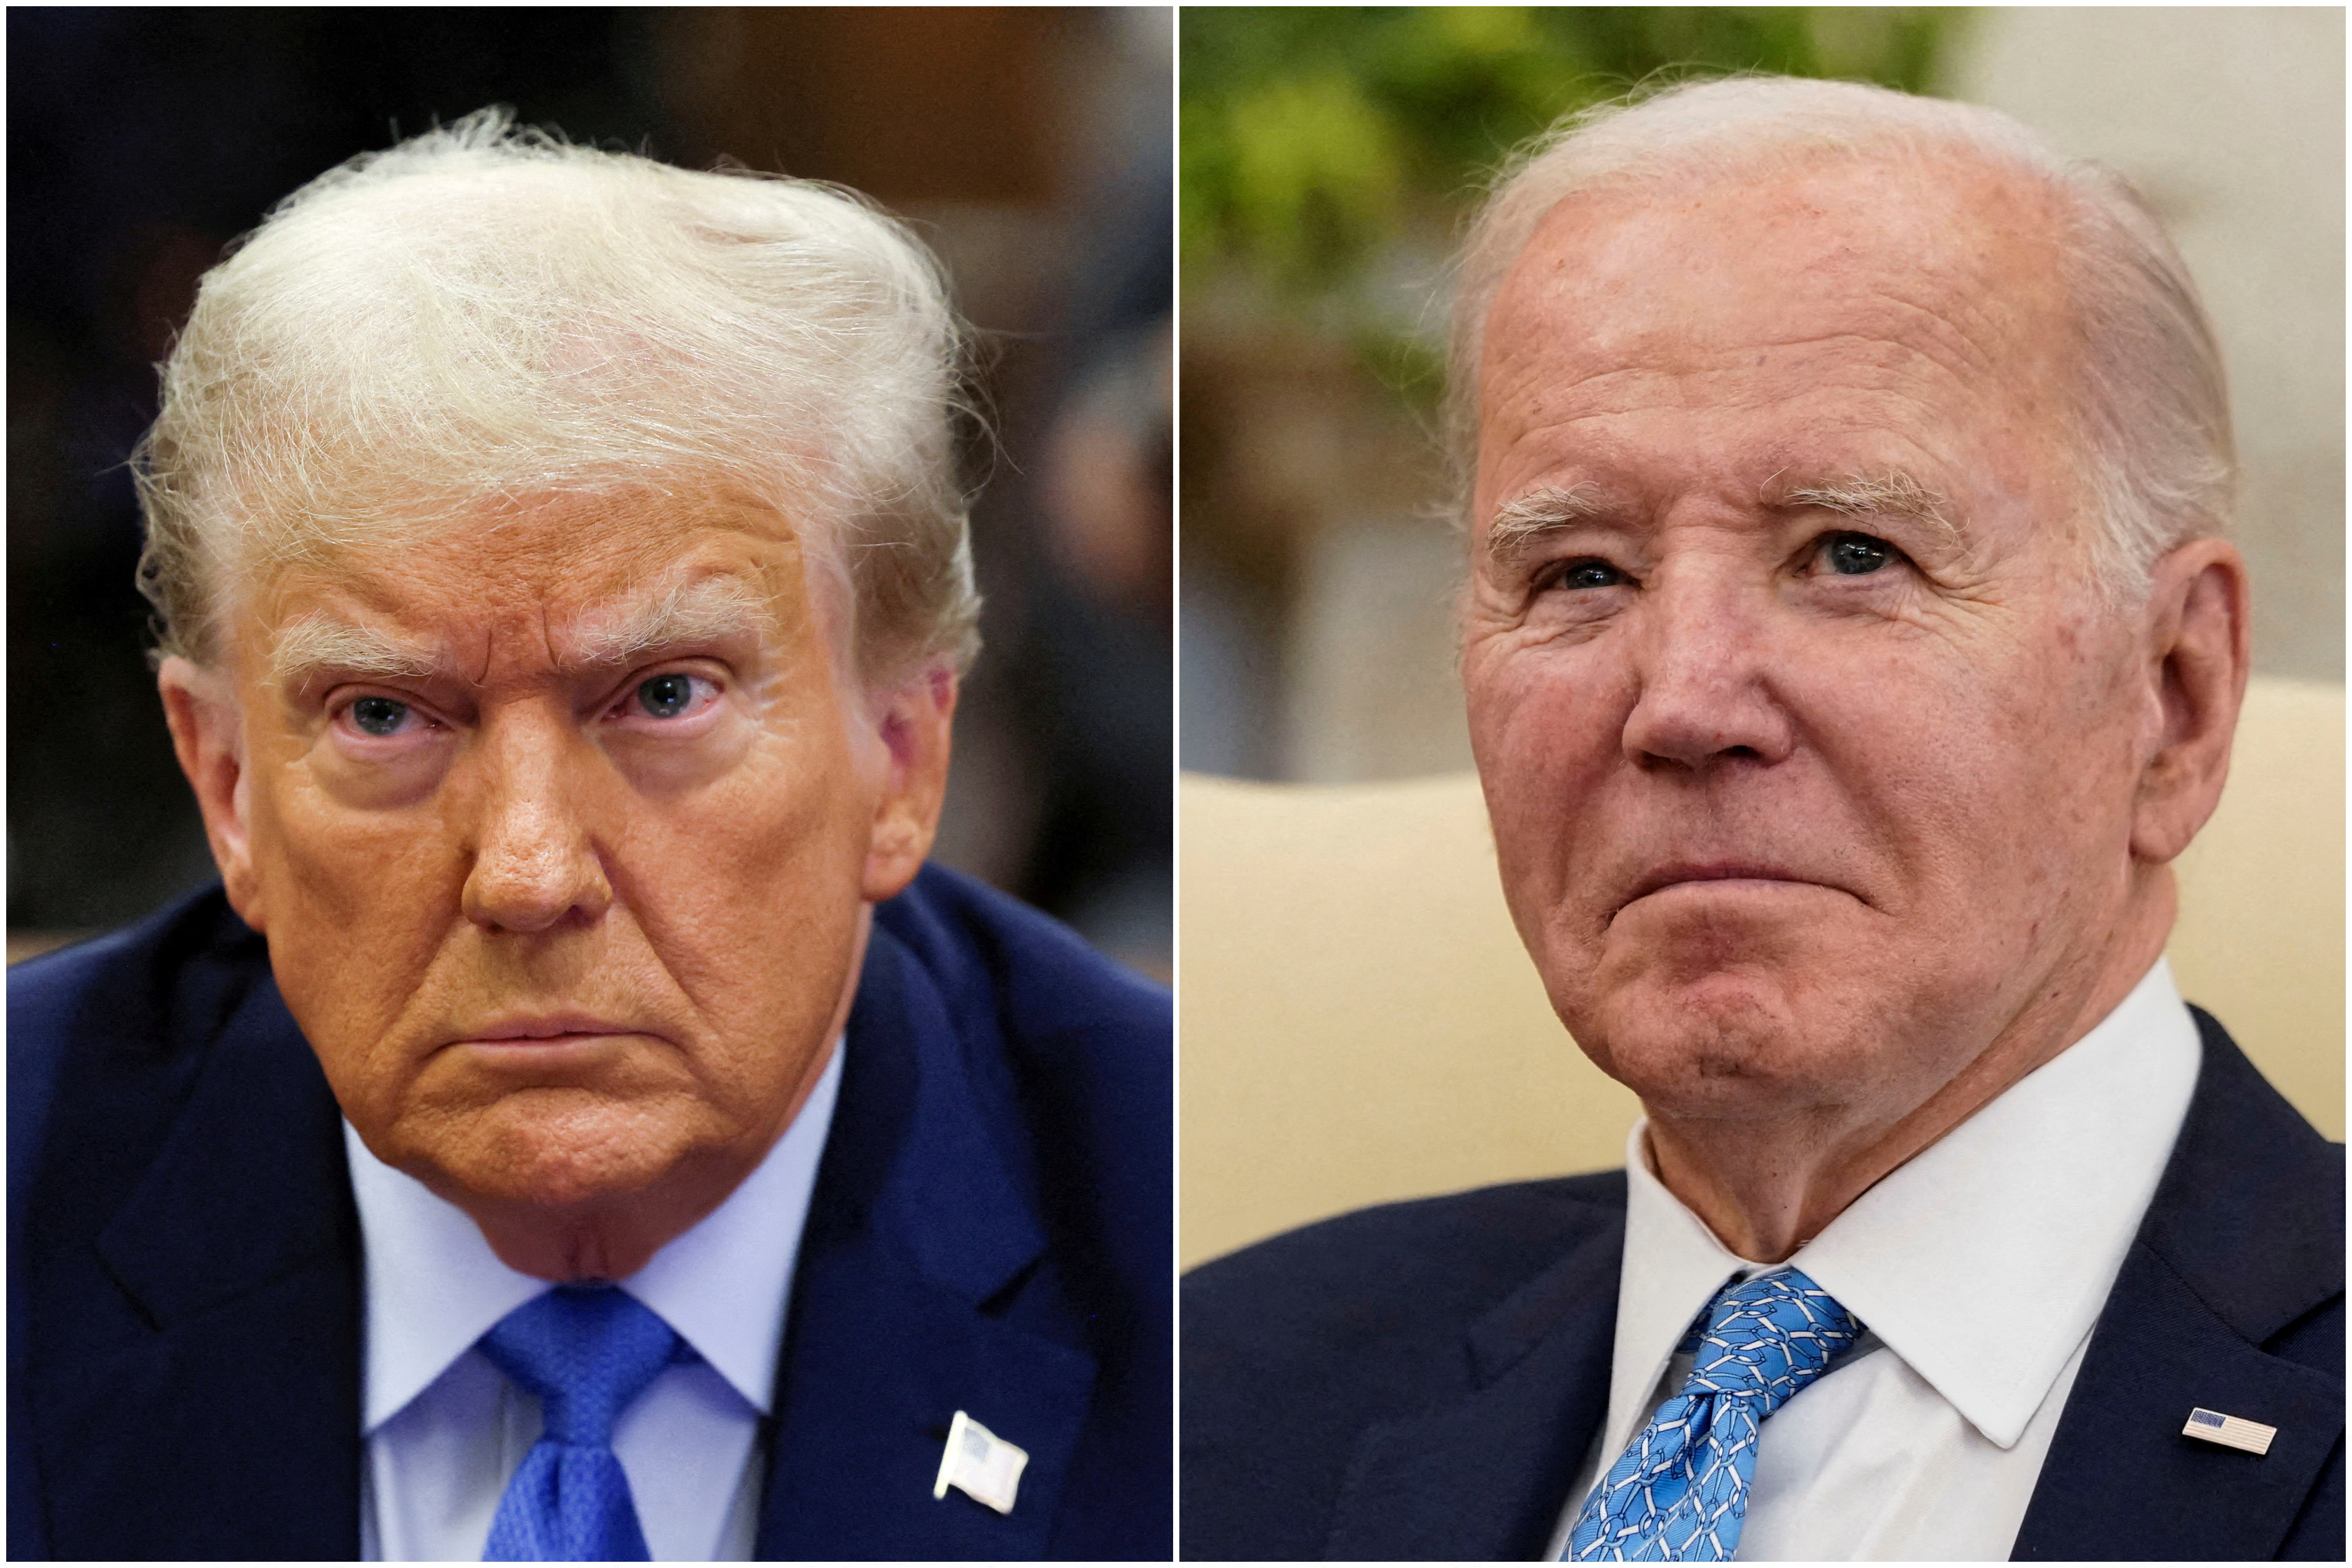 Combination picture showing Former U.S. President Donald Trump and U.S. President Joe Biden